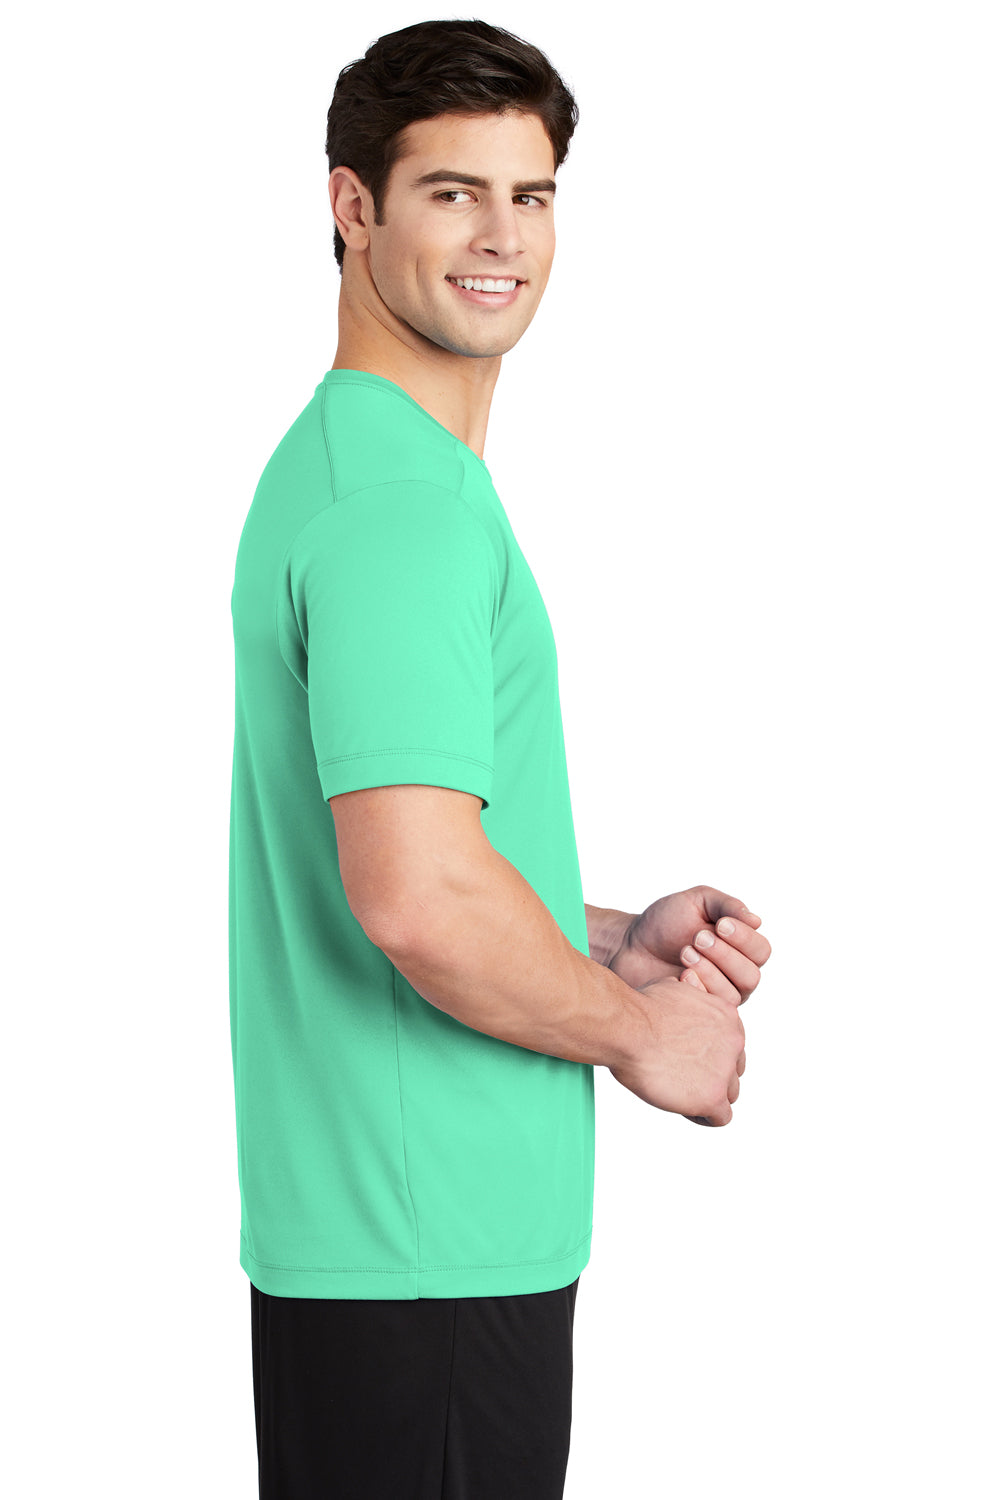 Sport-Tek Mens Short Sleeve Crewneck T-Shirt Bright Seafoam Green Side